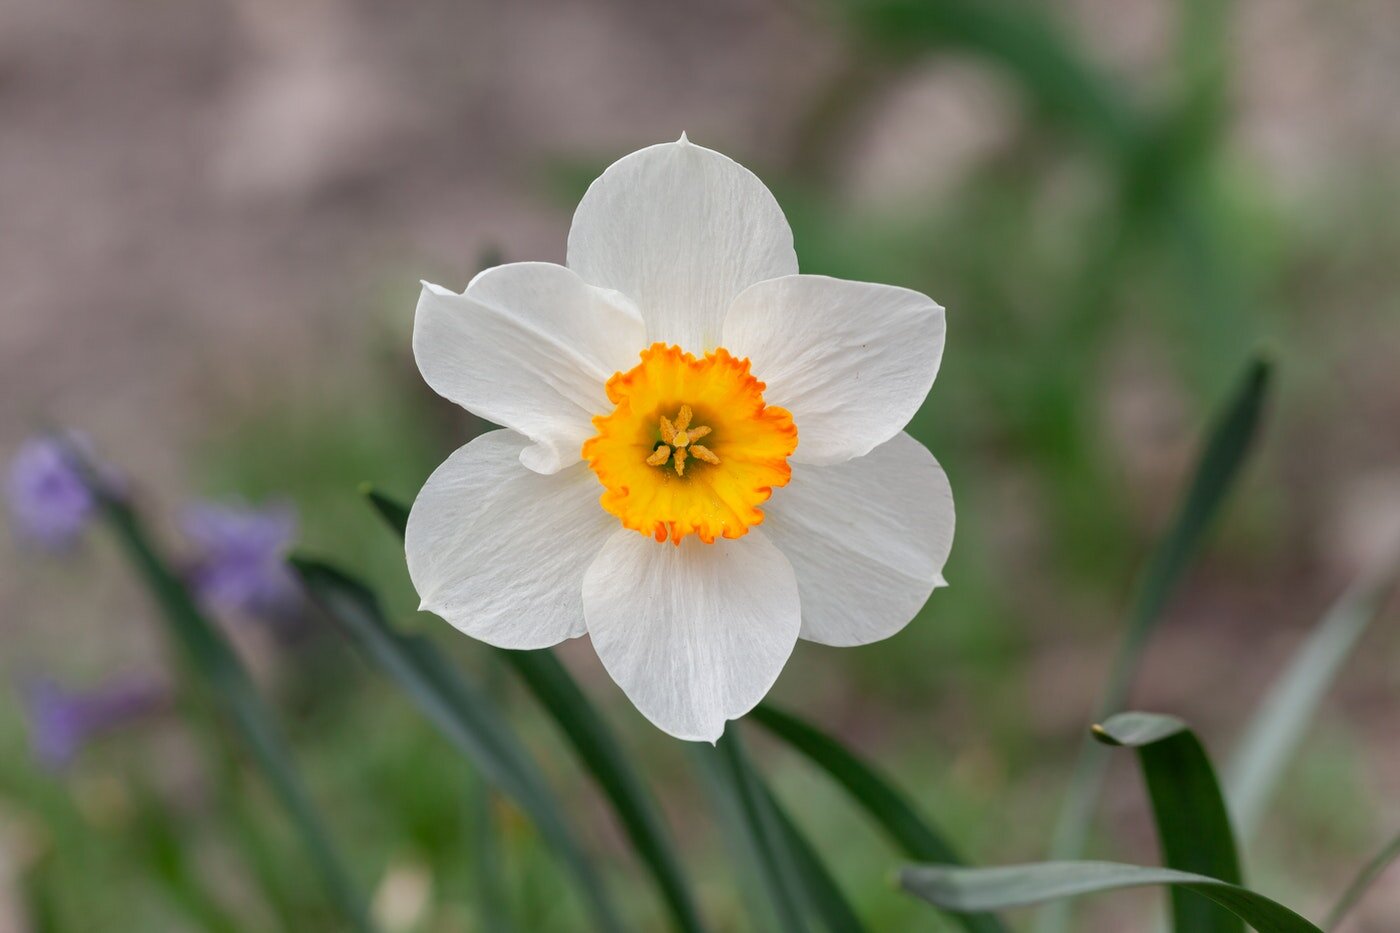 white and yellow daffodil - daffodil symbolism